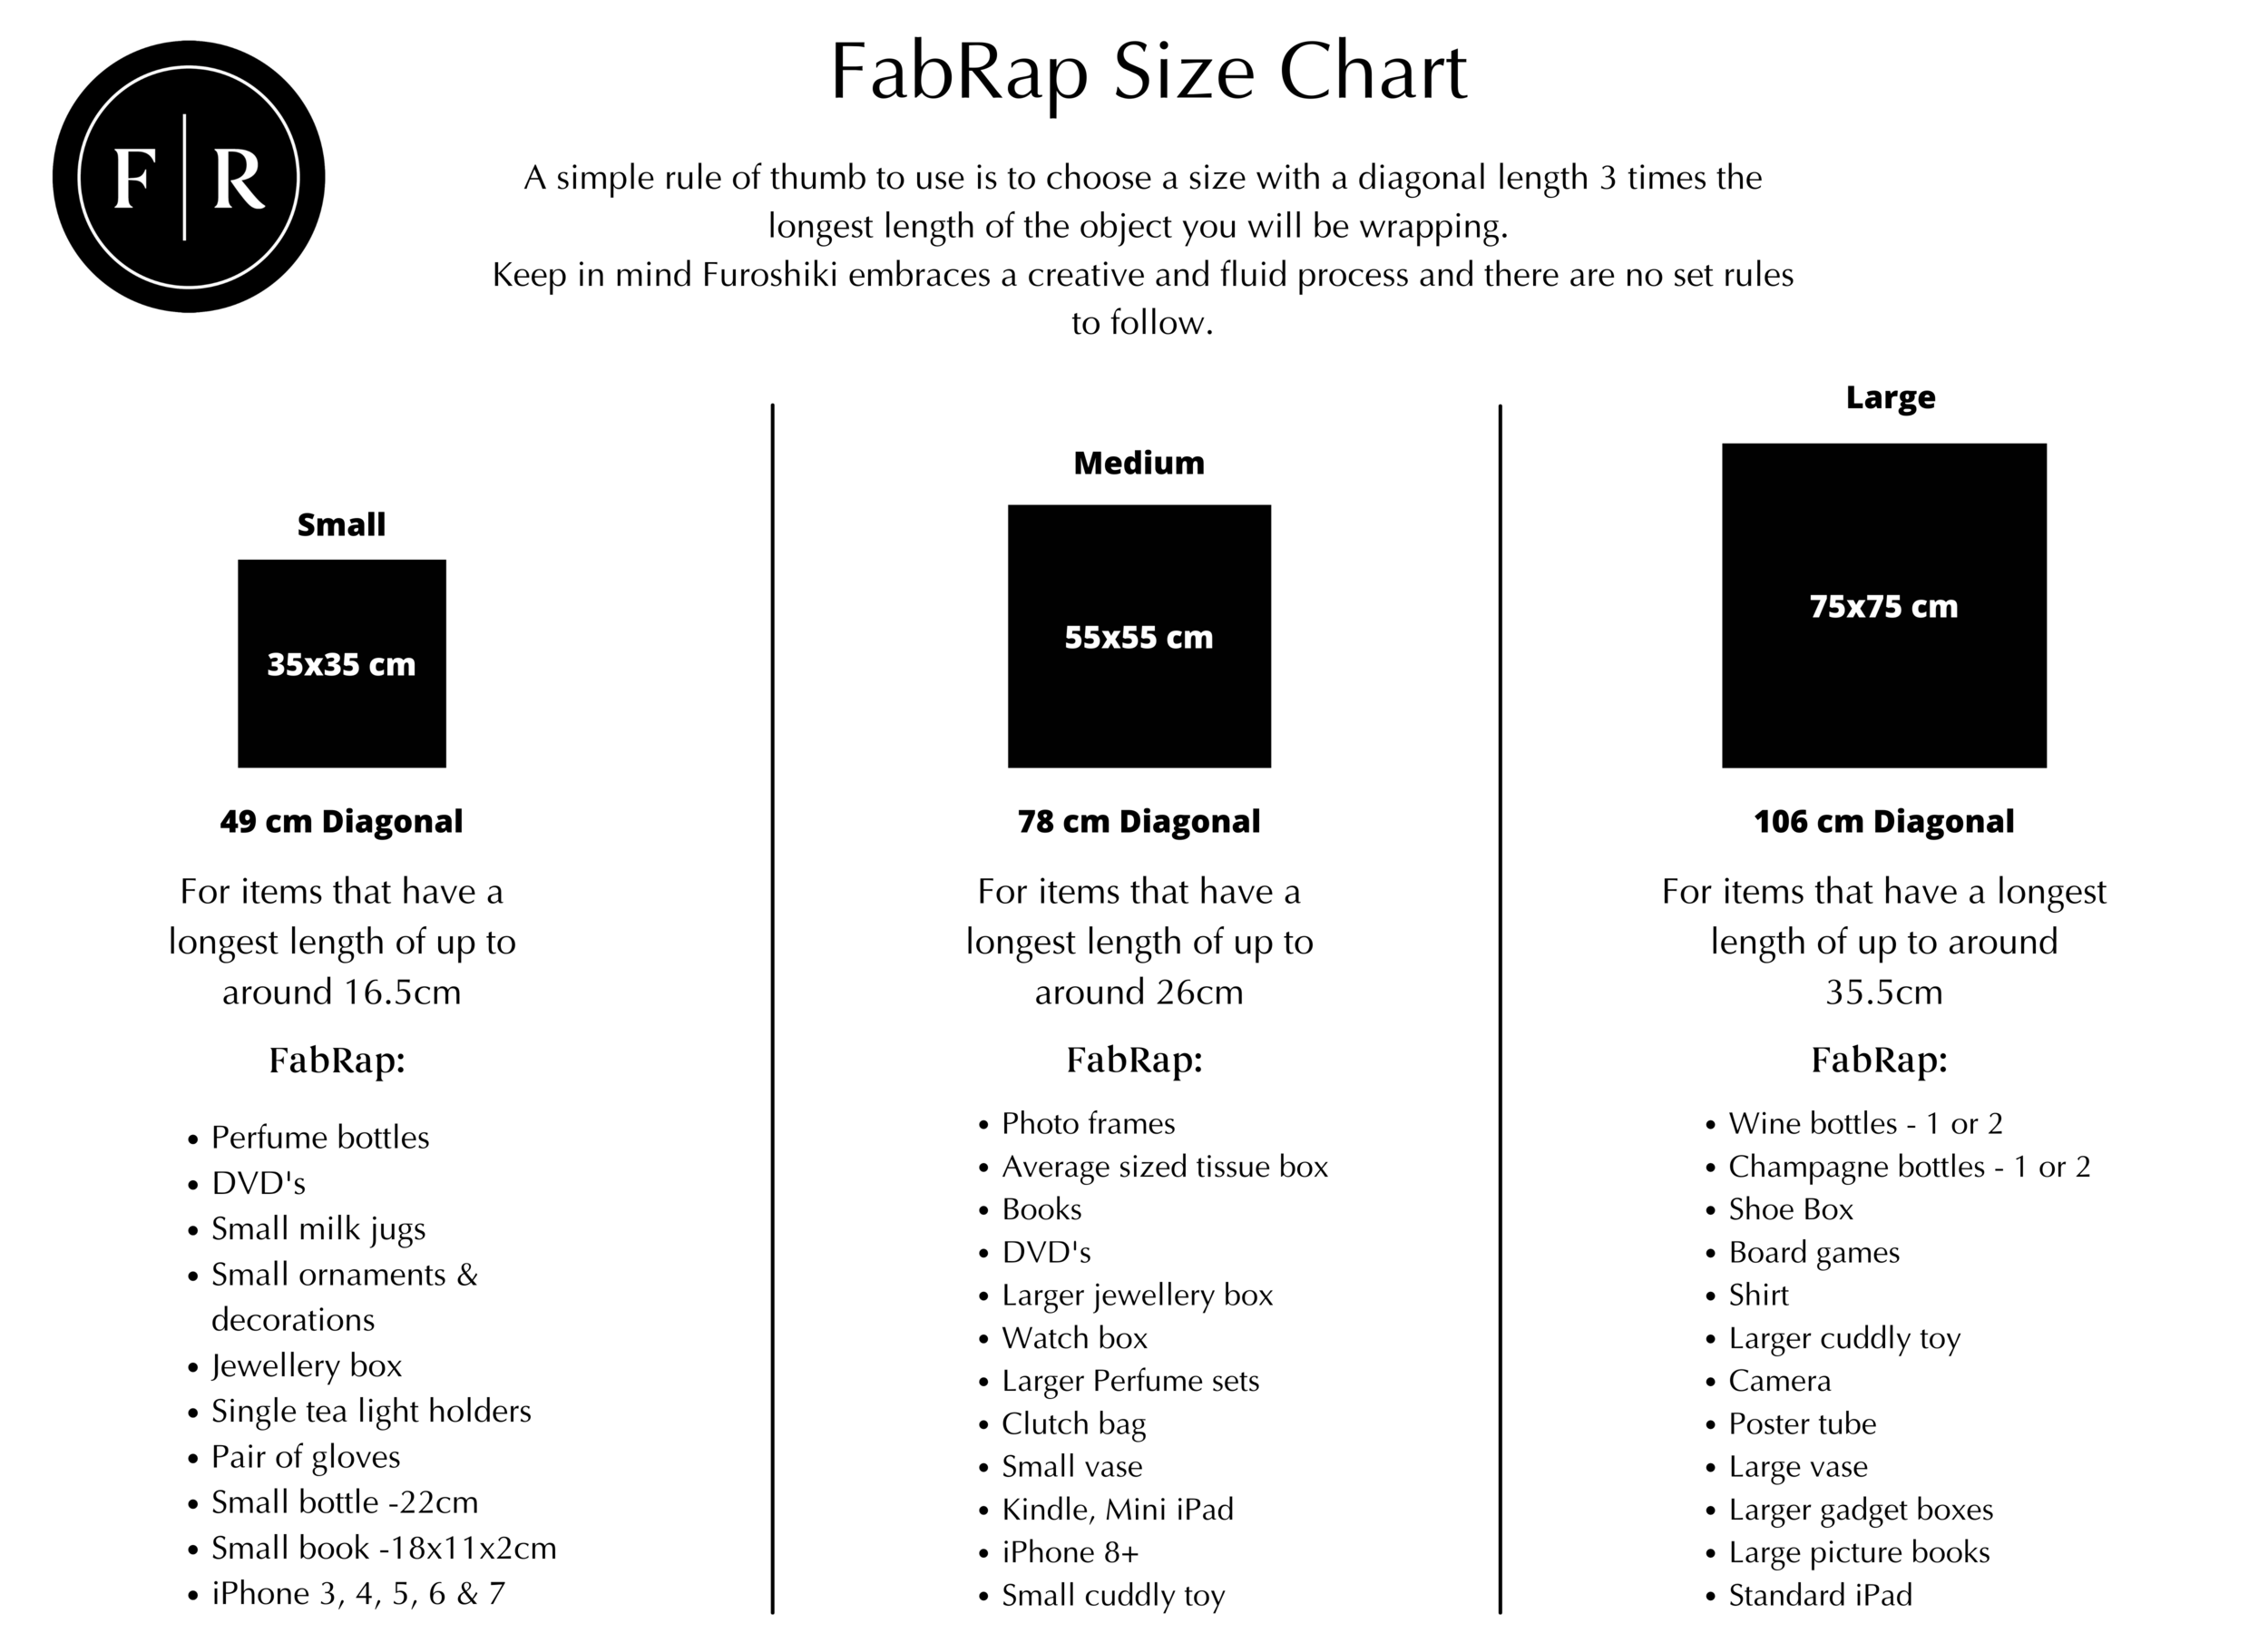 FabRap Size Chart.png